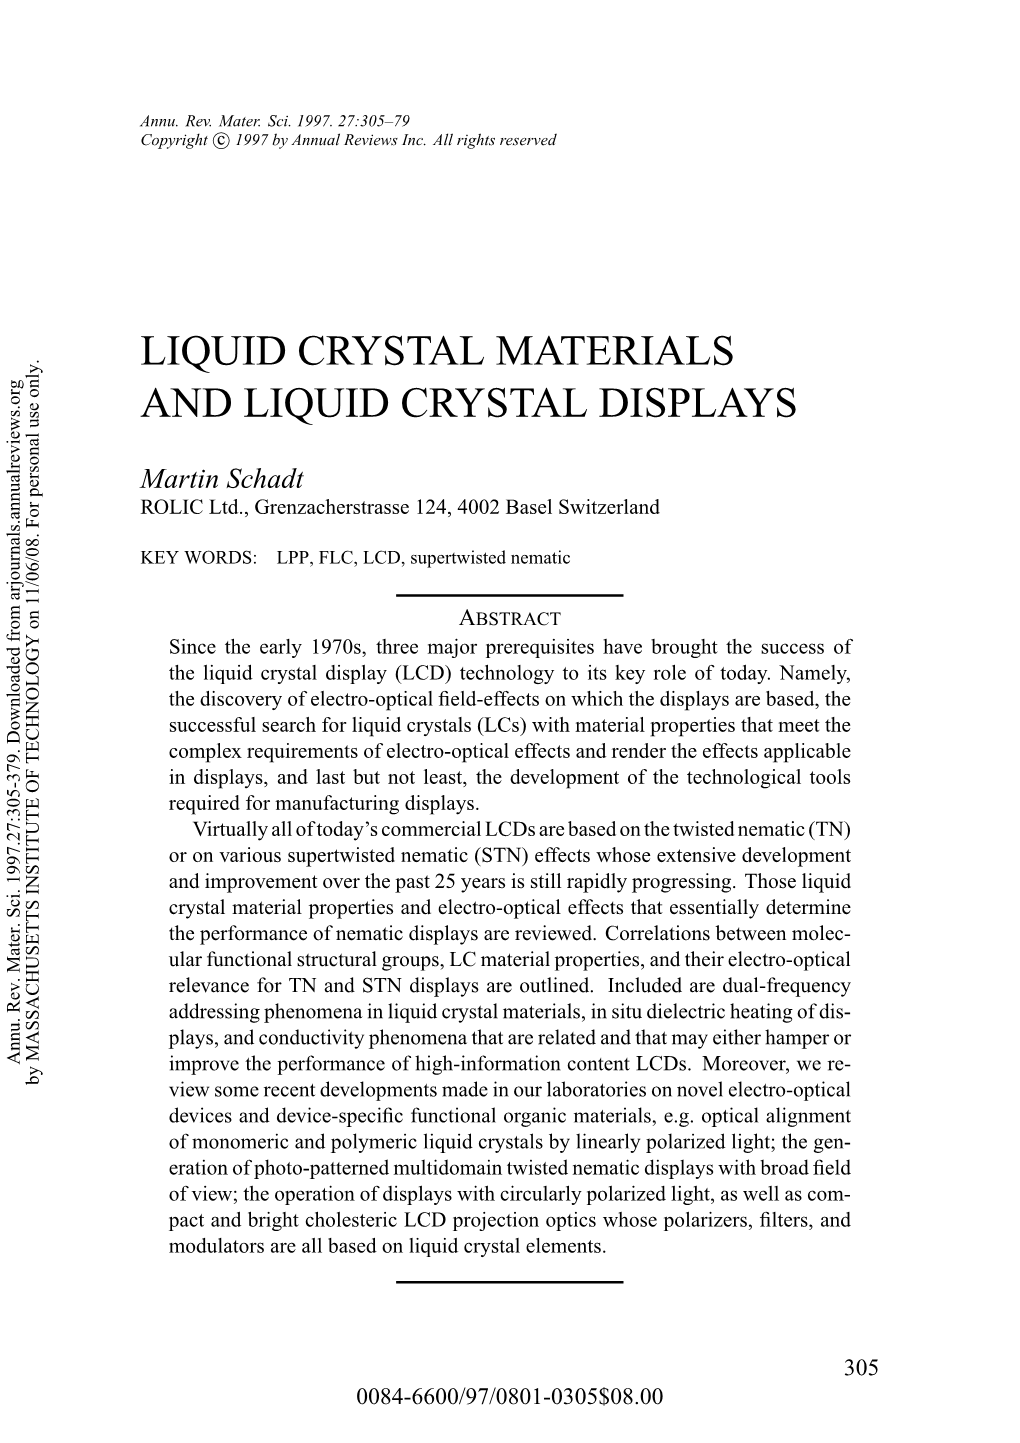 Liquid Crystal Materials and Liquid Crystal Displays